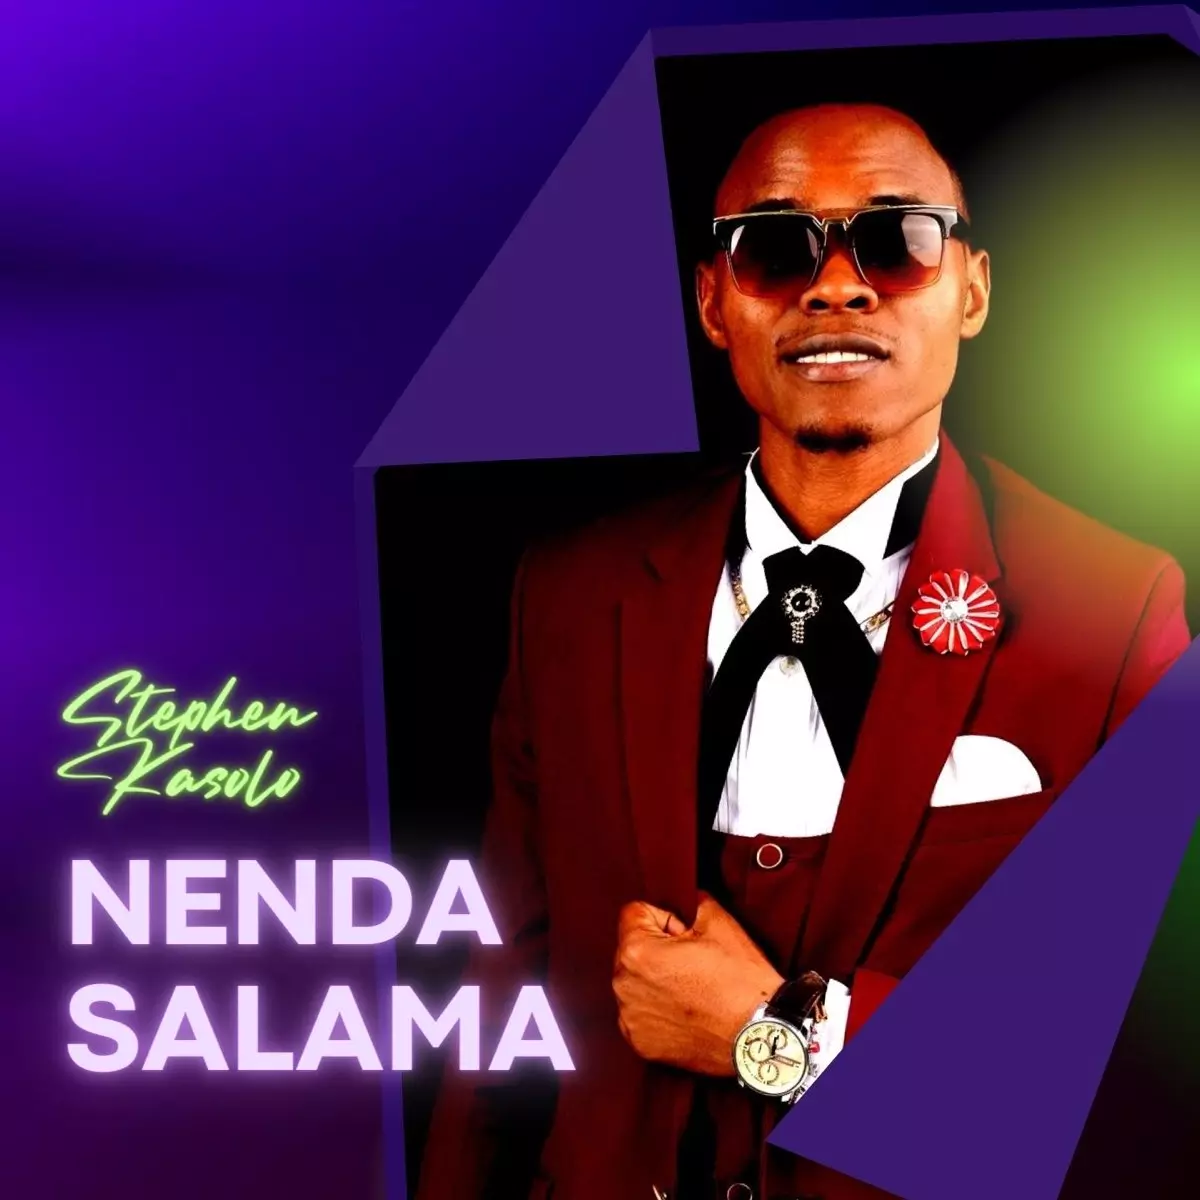 Nenda Salama - Single by Stephen Kasolo on Apple Music